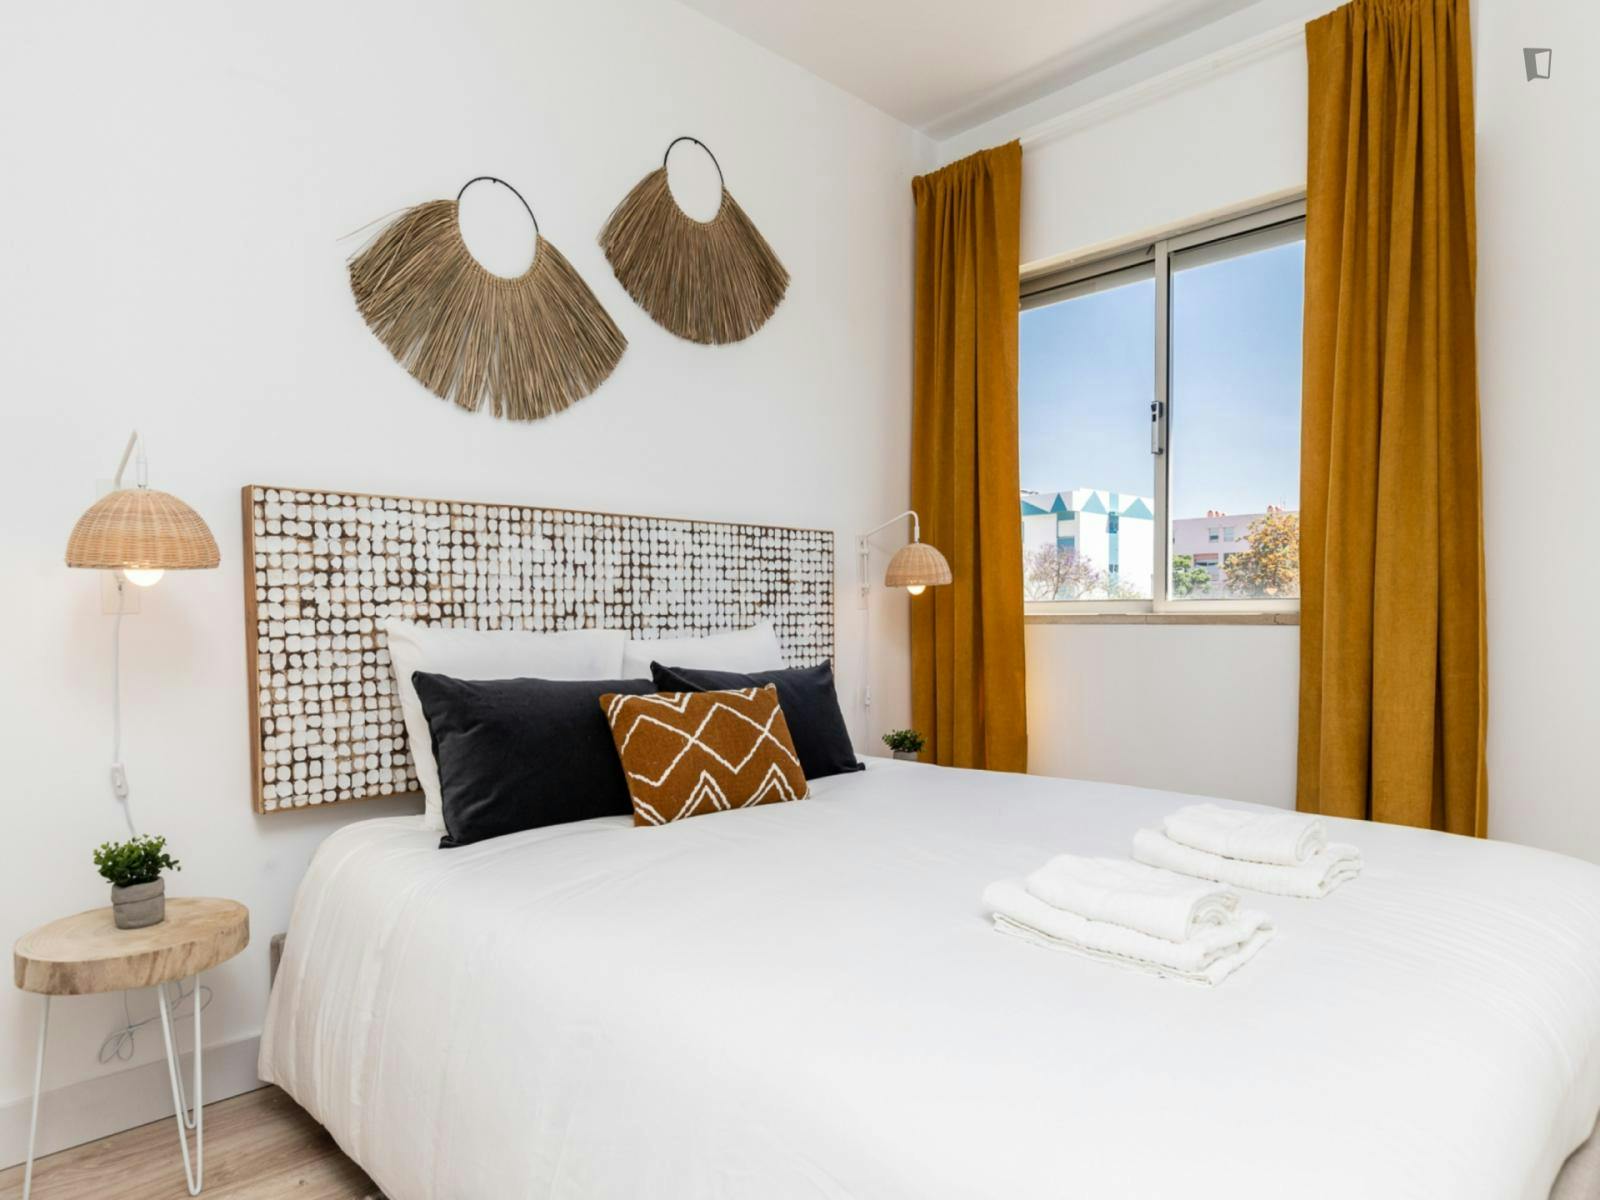 Superb 3-bedroom flat in Faro